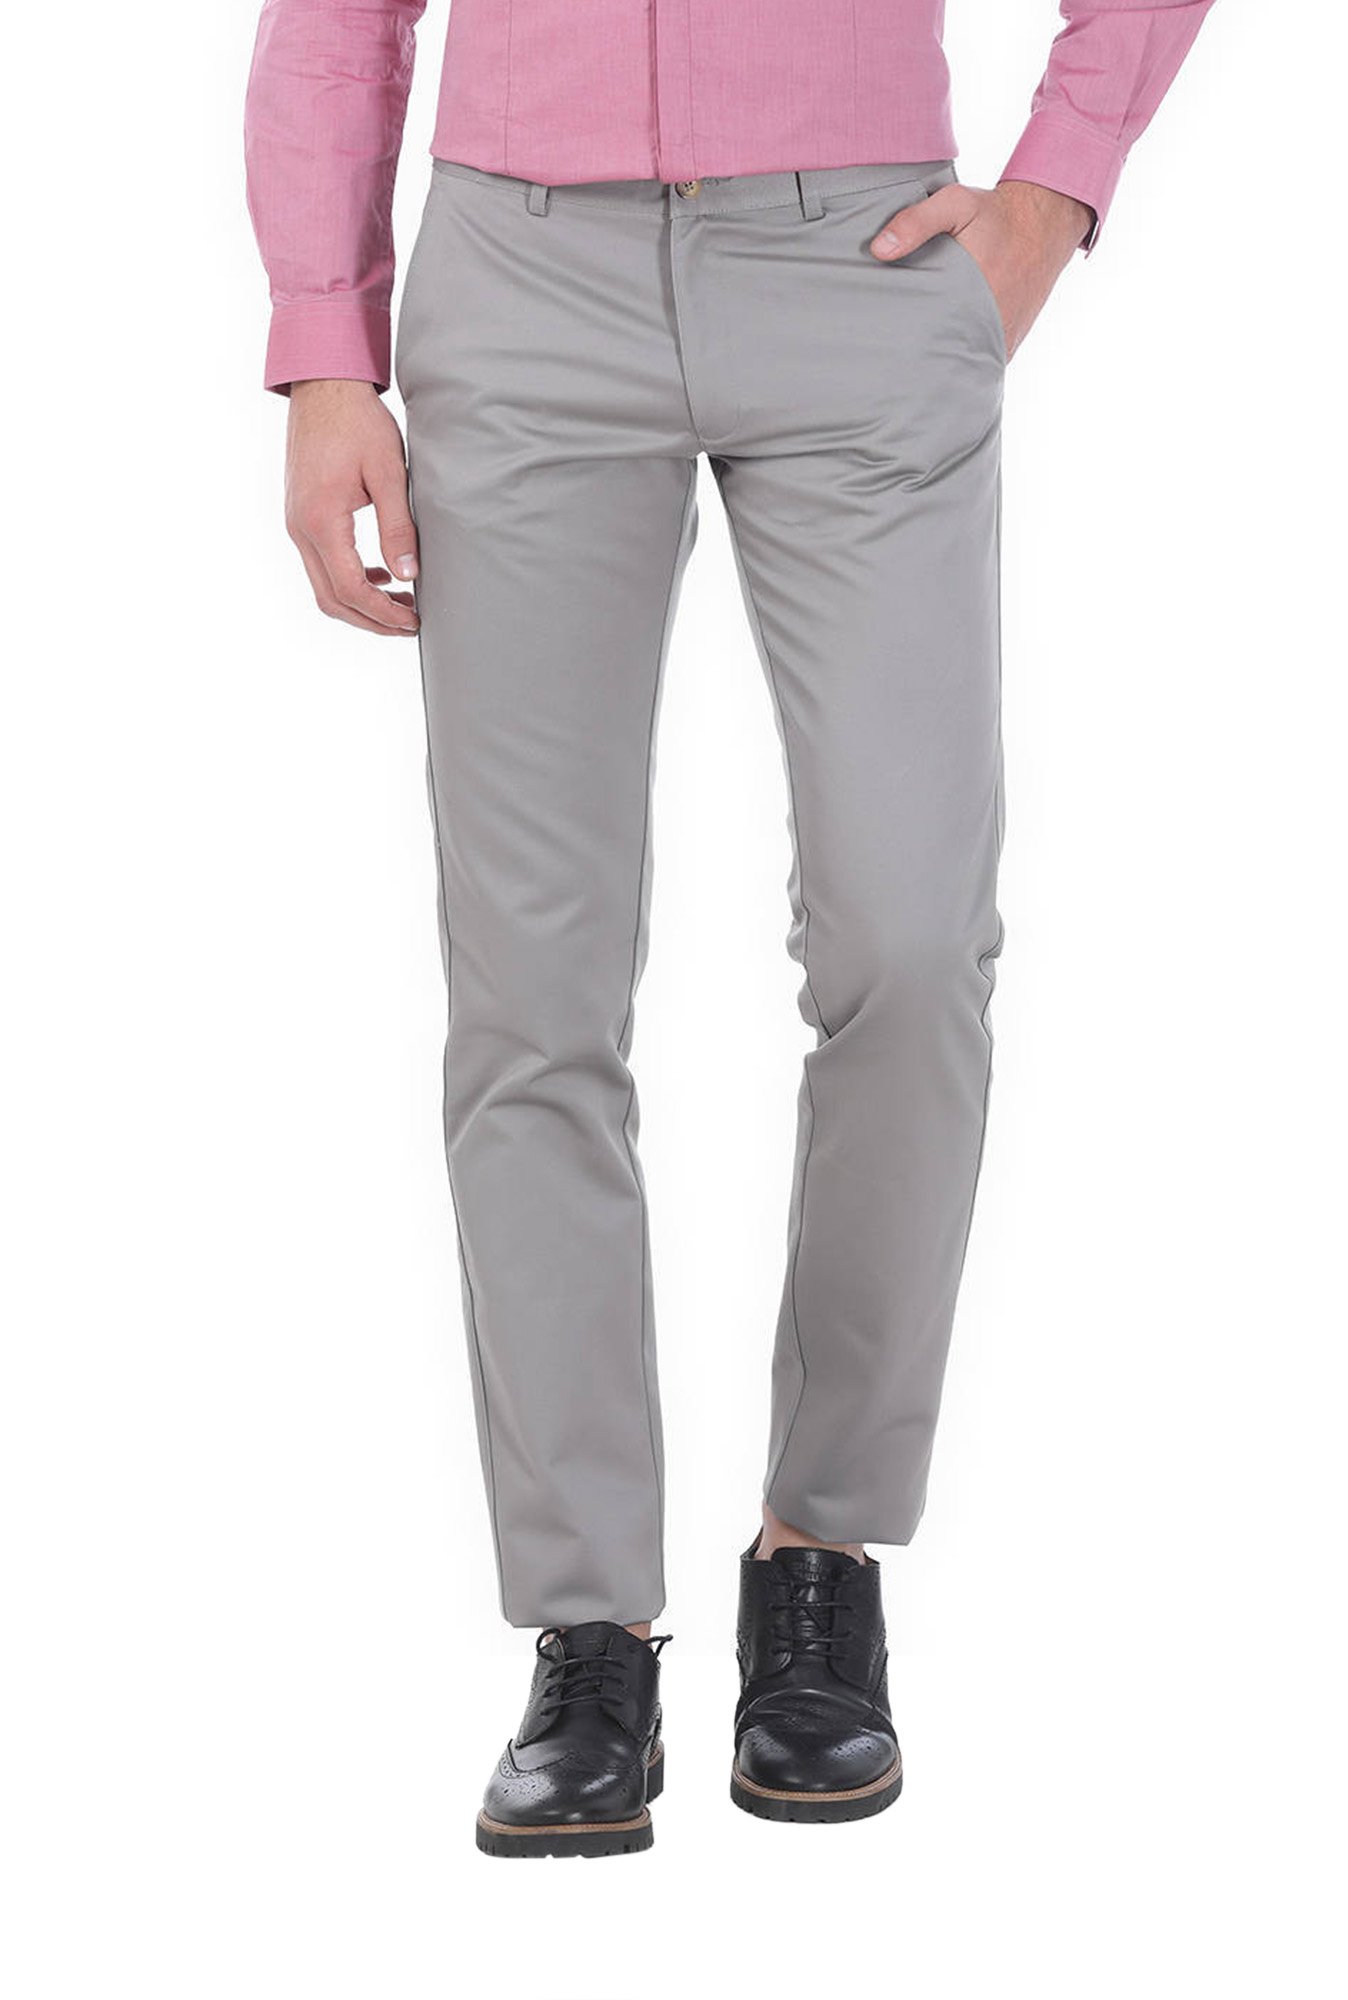 Priscavera Low Rise Suit Trouser  Charcoal  Garmentory